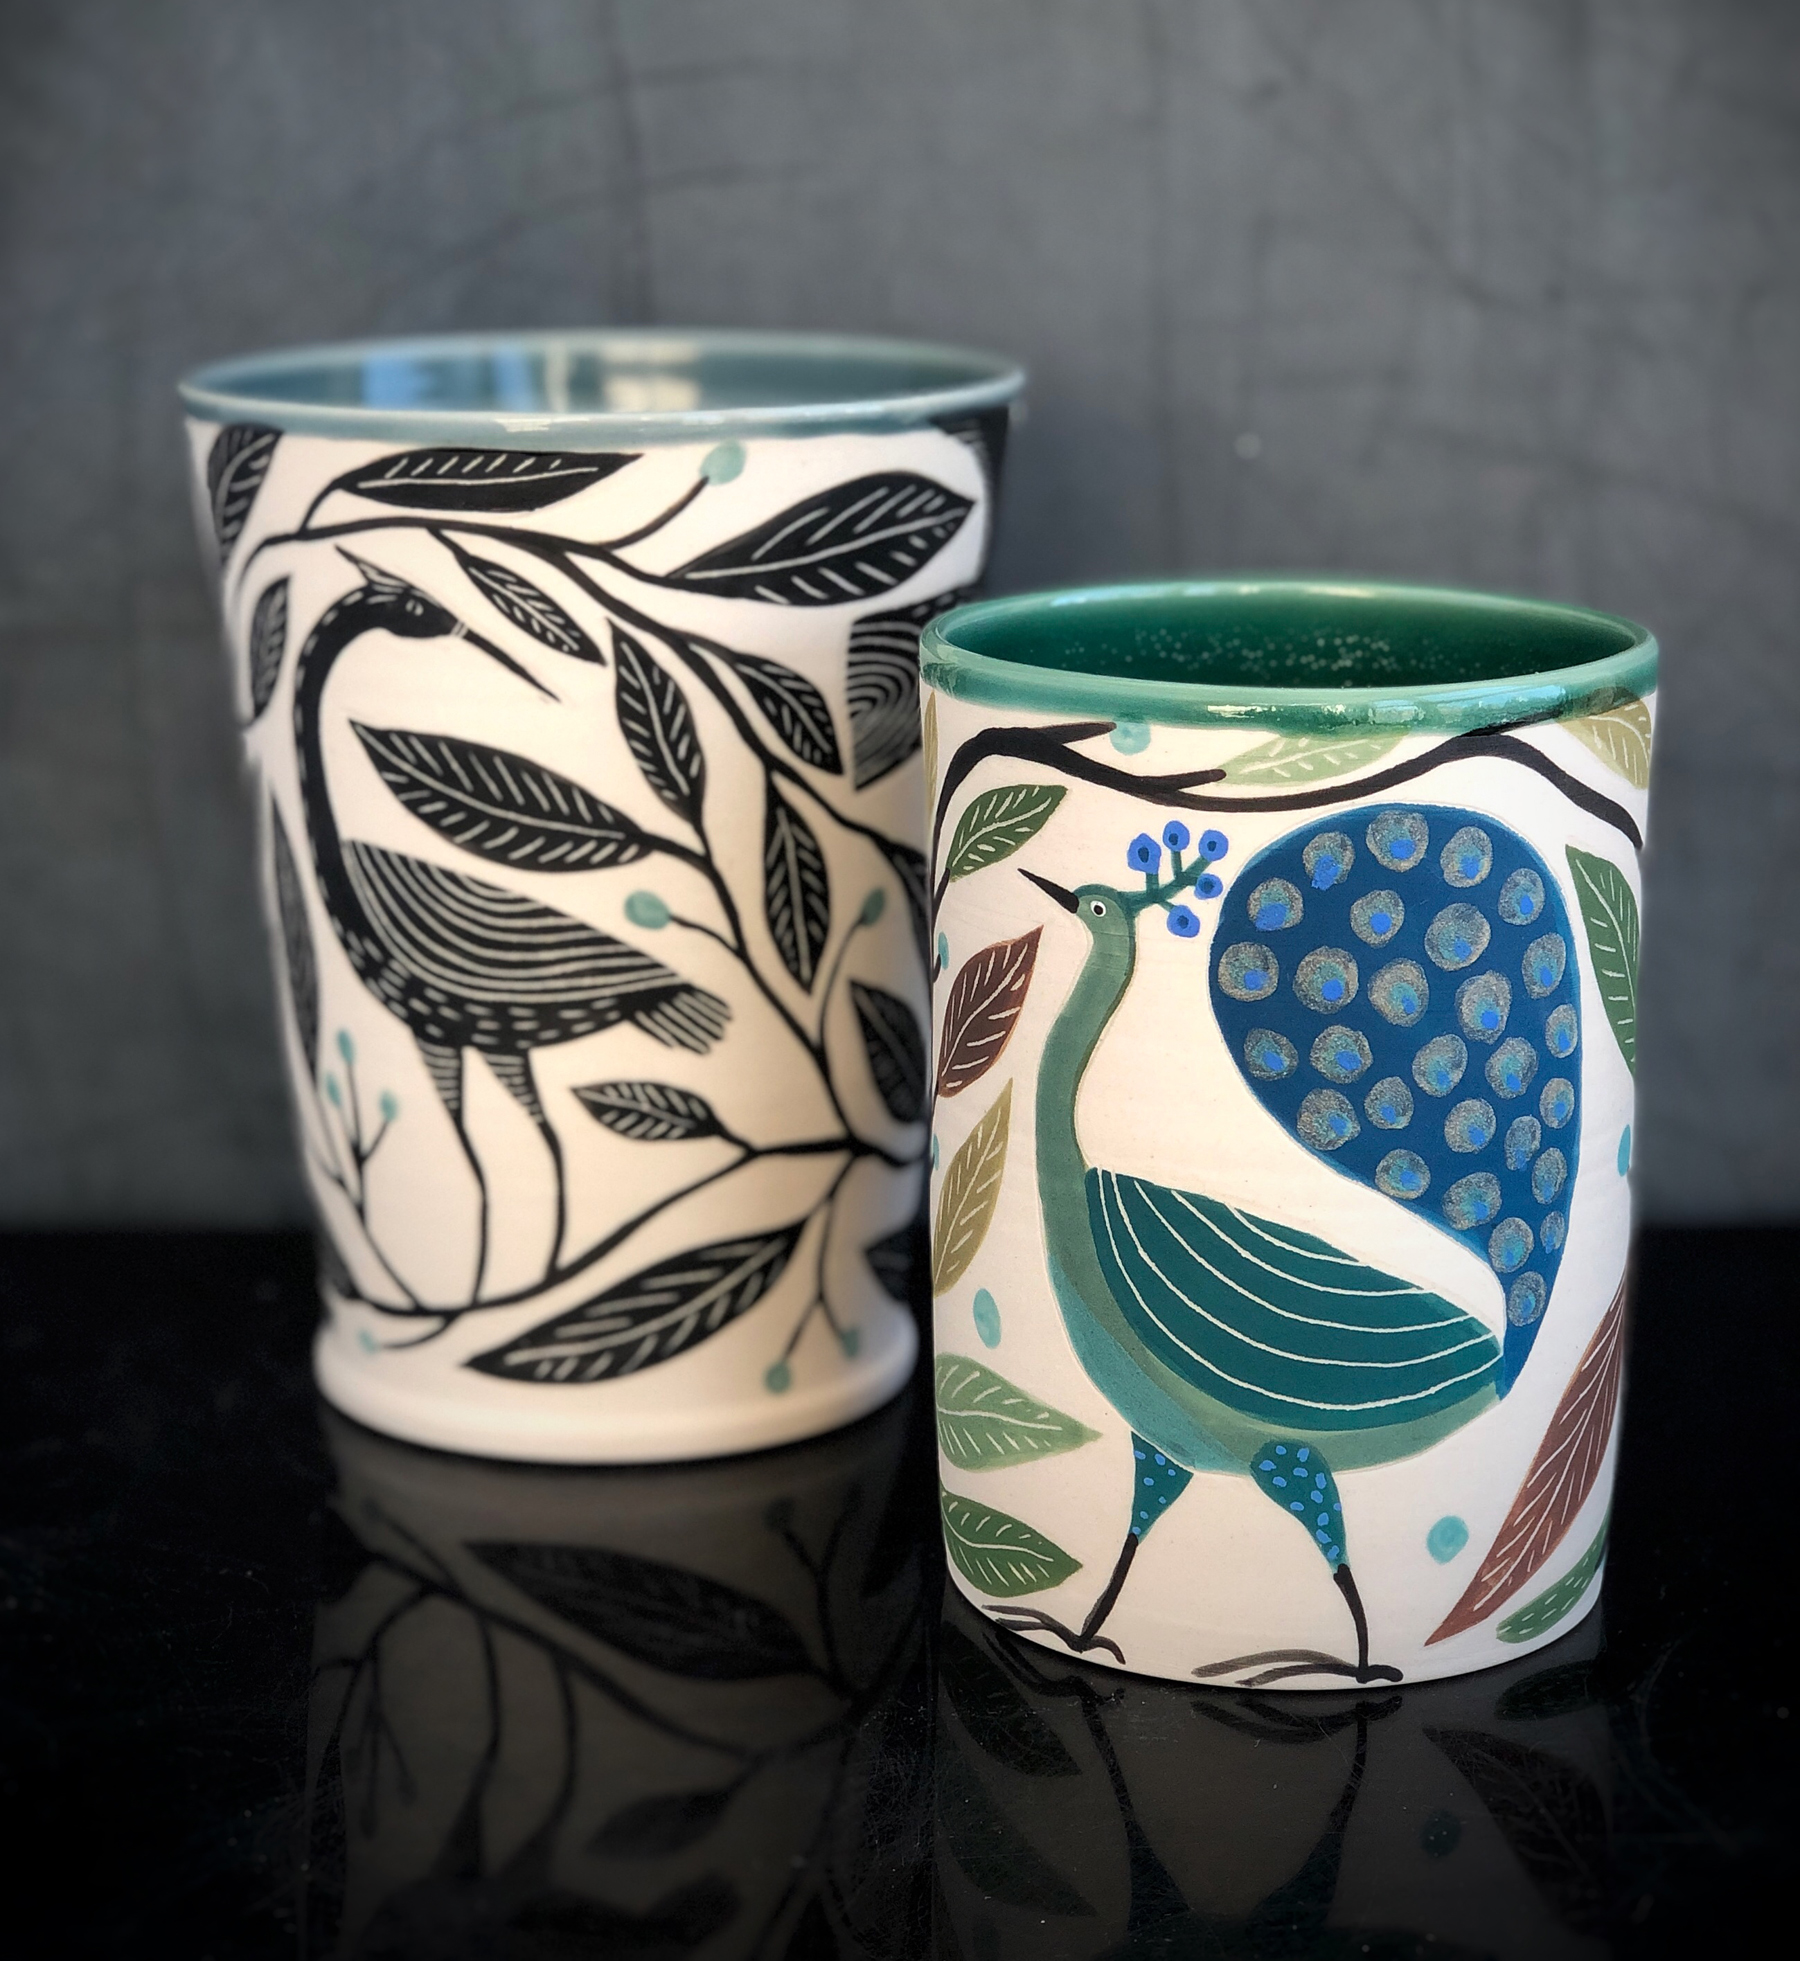 2-Gabrielle_Schaffner_porcelain-two_vases_with_birds.jpg